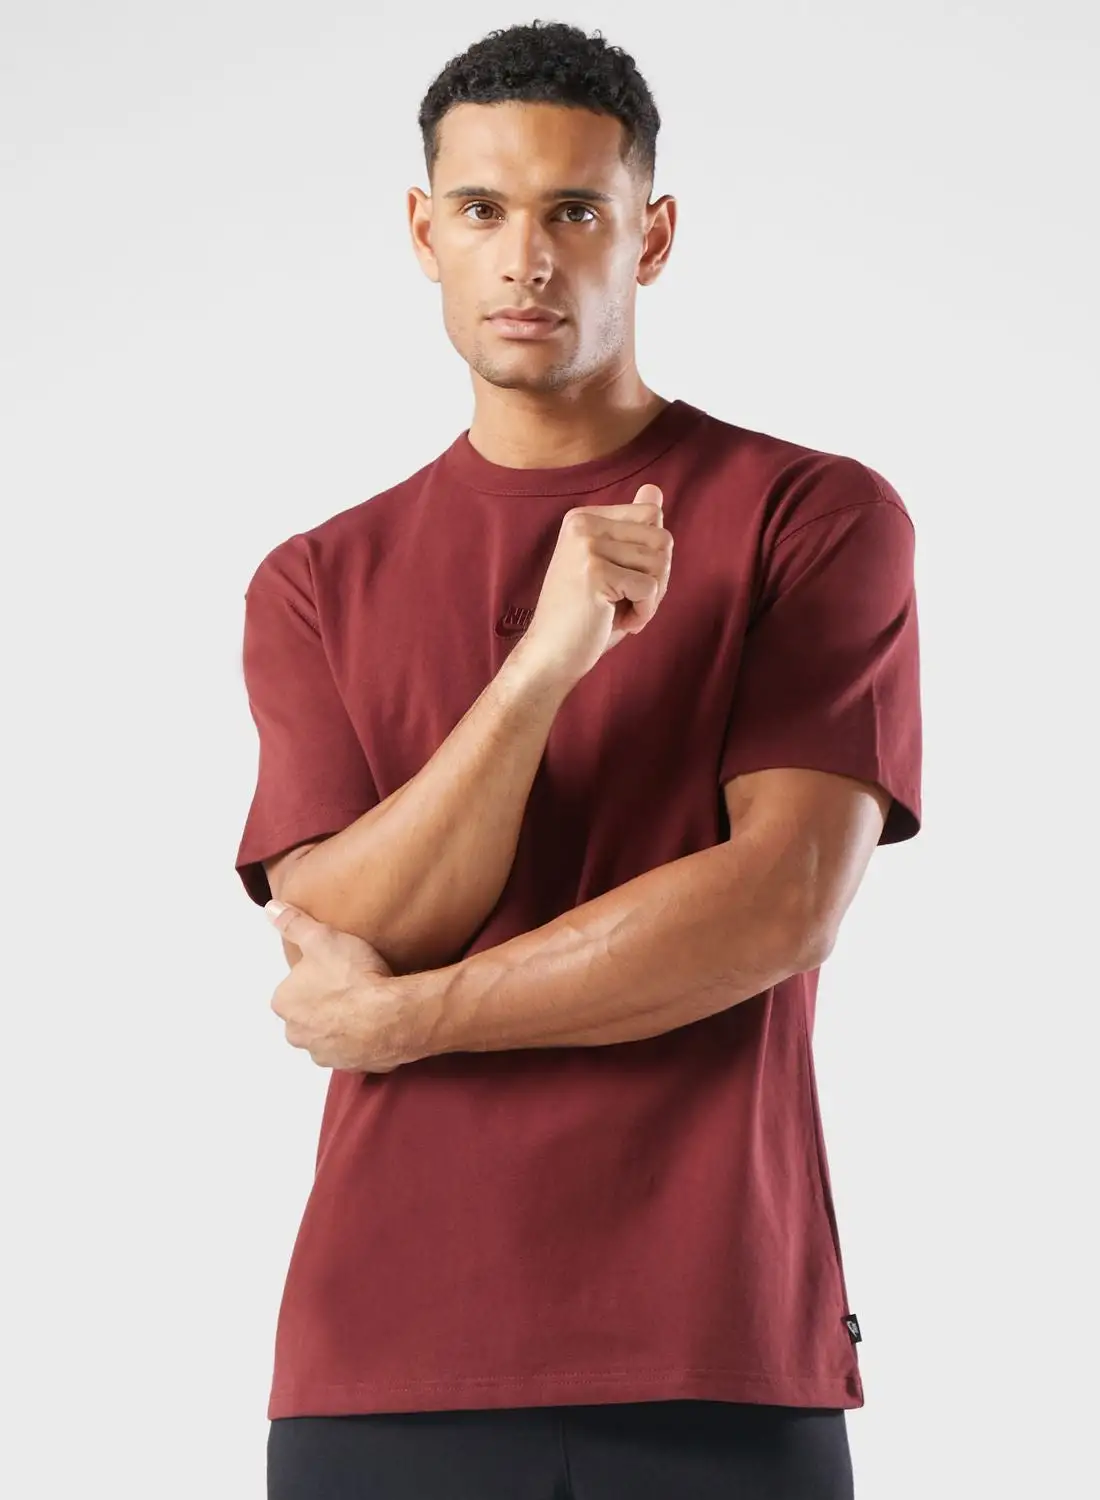 Nike Nsw Premium Essential Sustainable T-Shirt